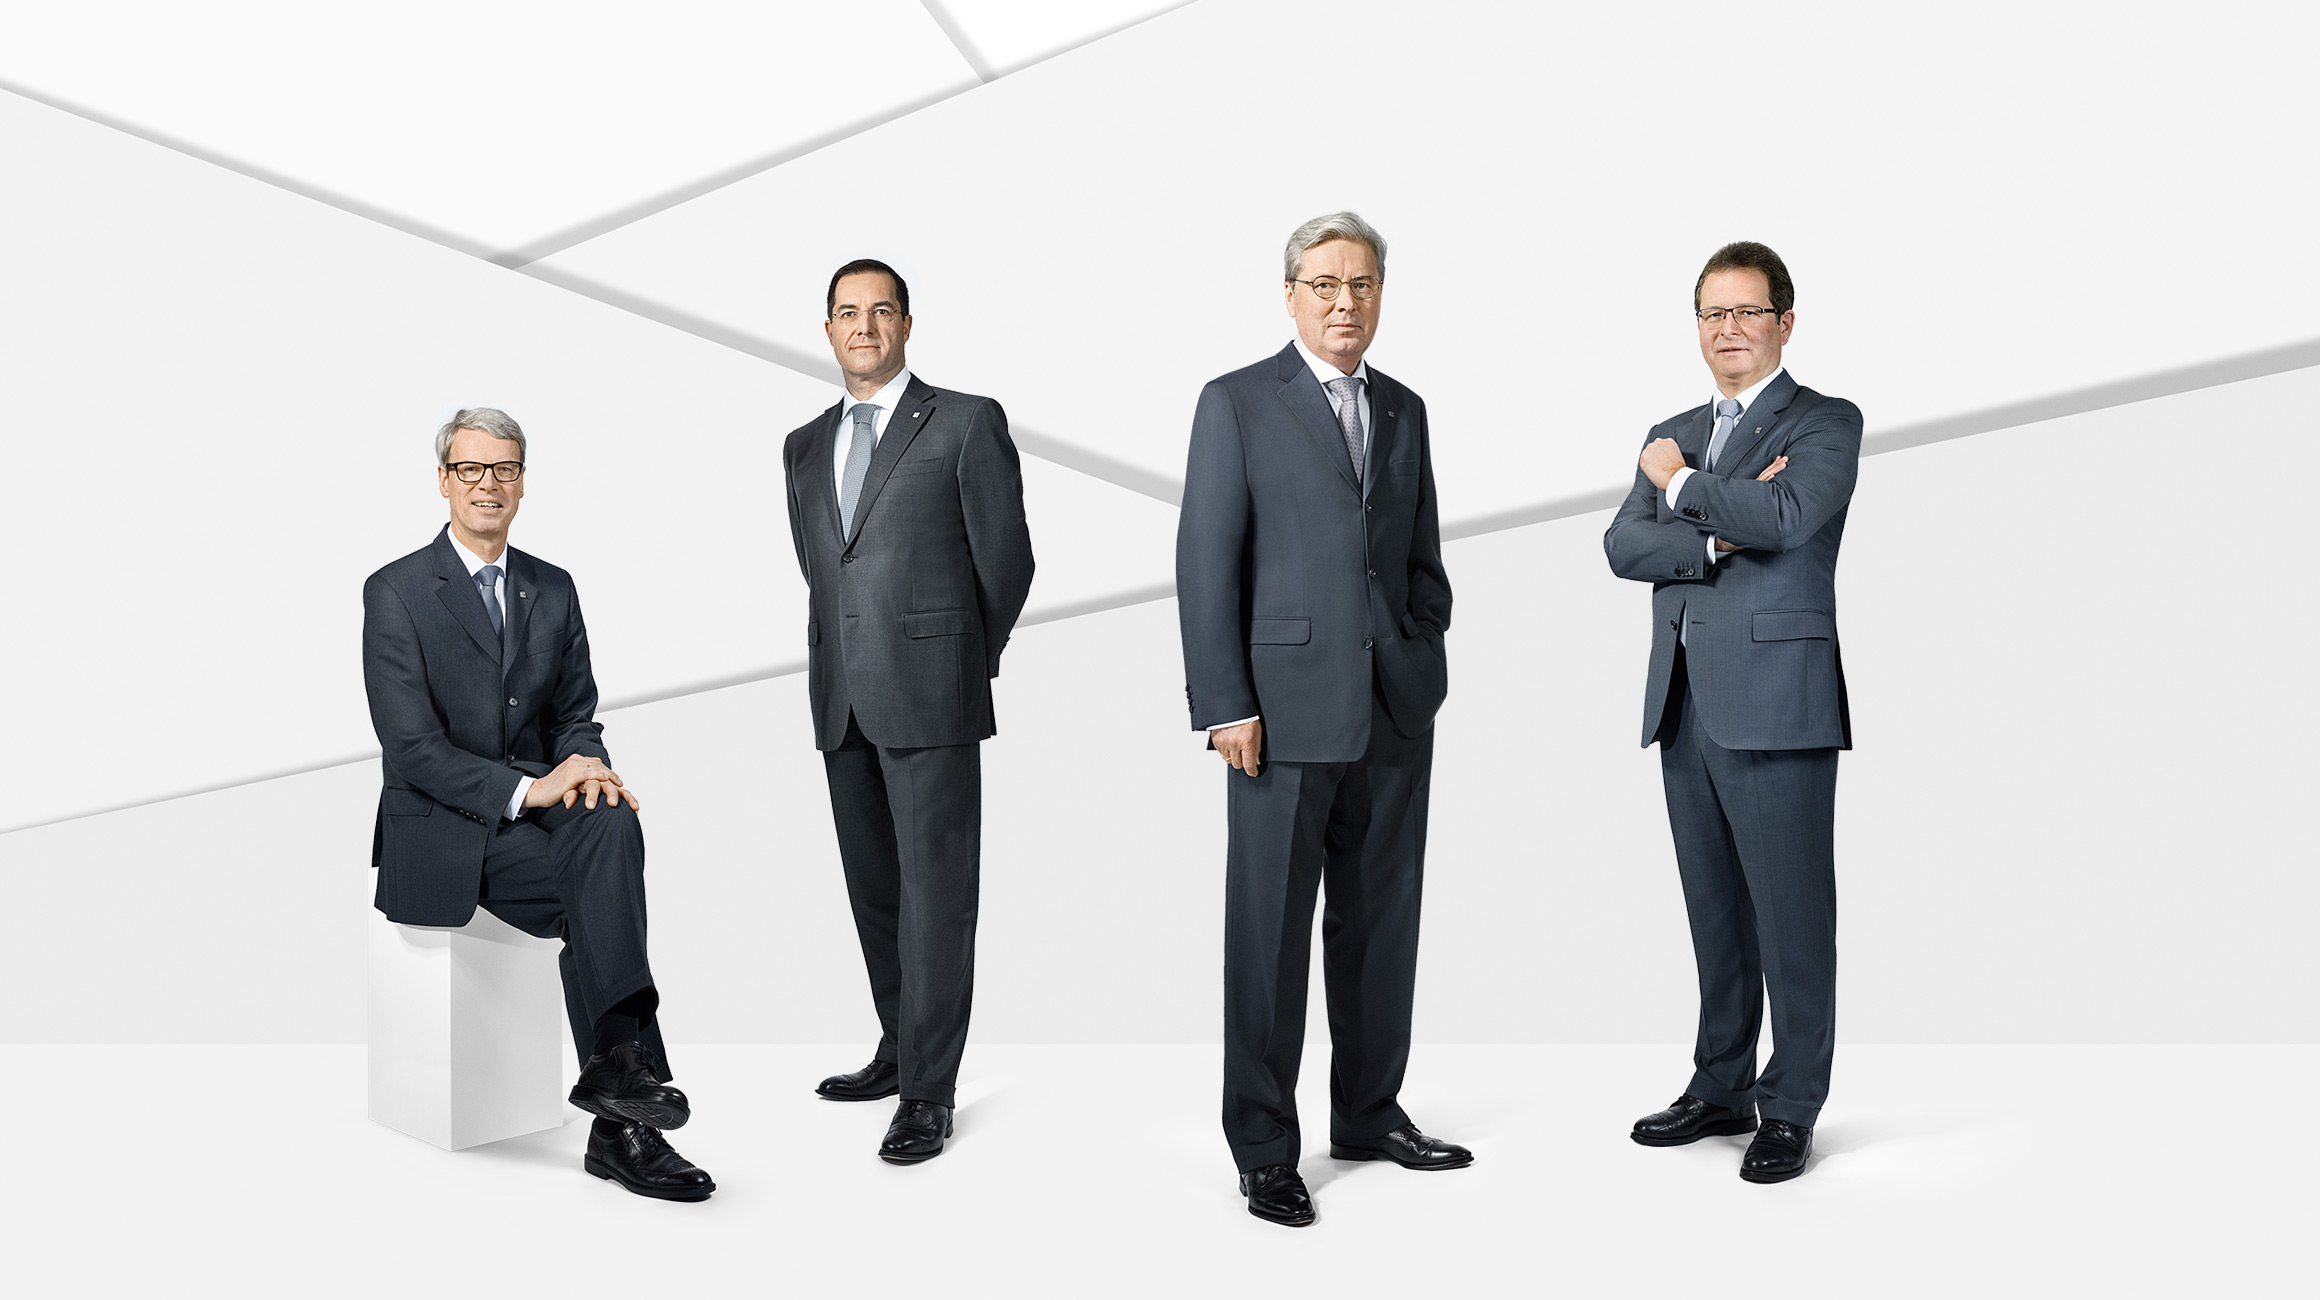 The Executive Committee: Mathias Lütgendorf, Patrick Jany (CFO), Hariolf Kottmann (CEO), Christian Kohlpaintner (from left to right) (photo)